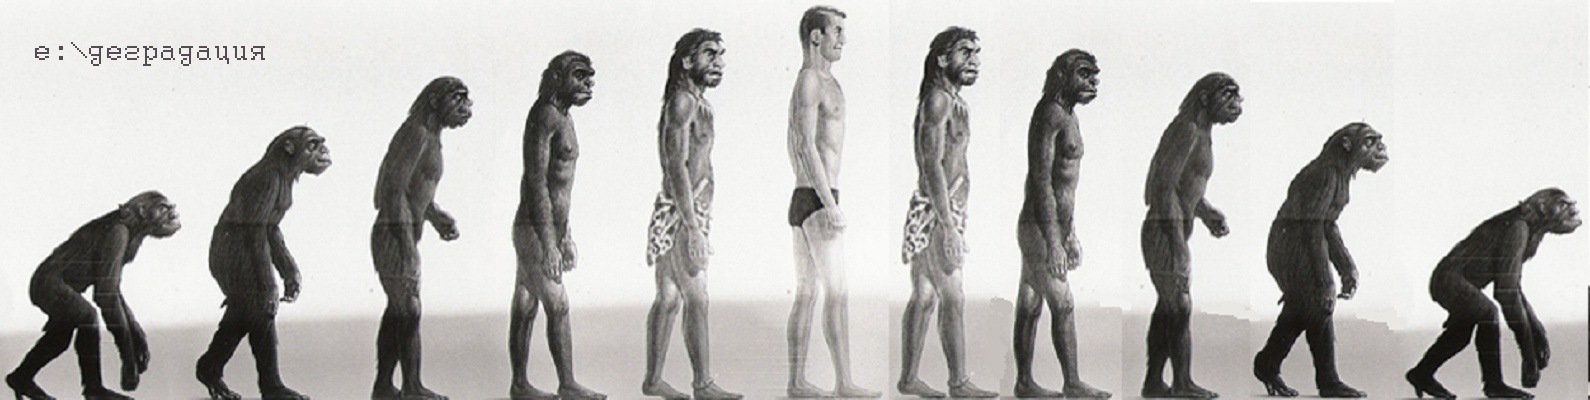 Эволюционирует ли человек. Эволюция человека хомо сапиенс. Хомо сапиенс обезьяна. Эволюция Дарвин хомо. Цепочка Дарвина эволюционная.